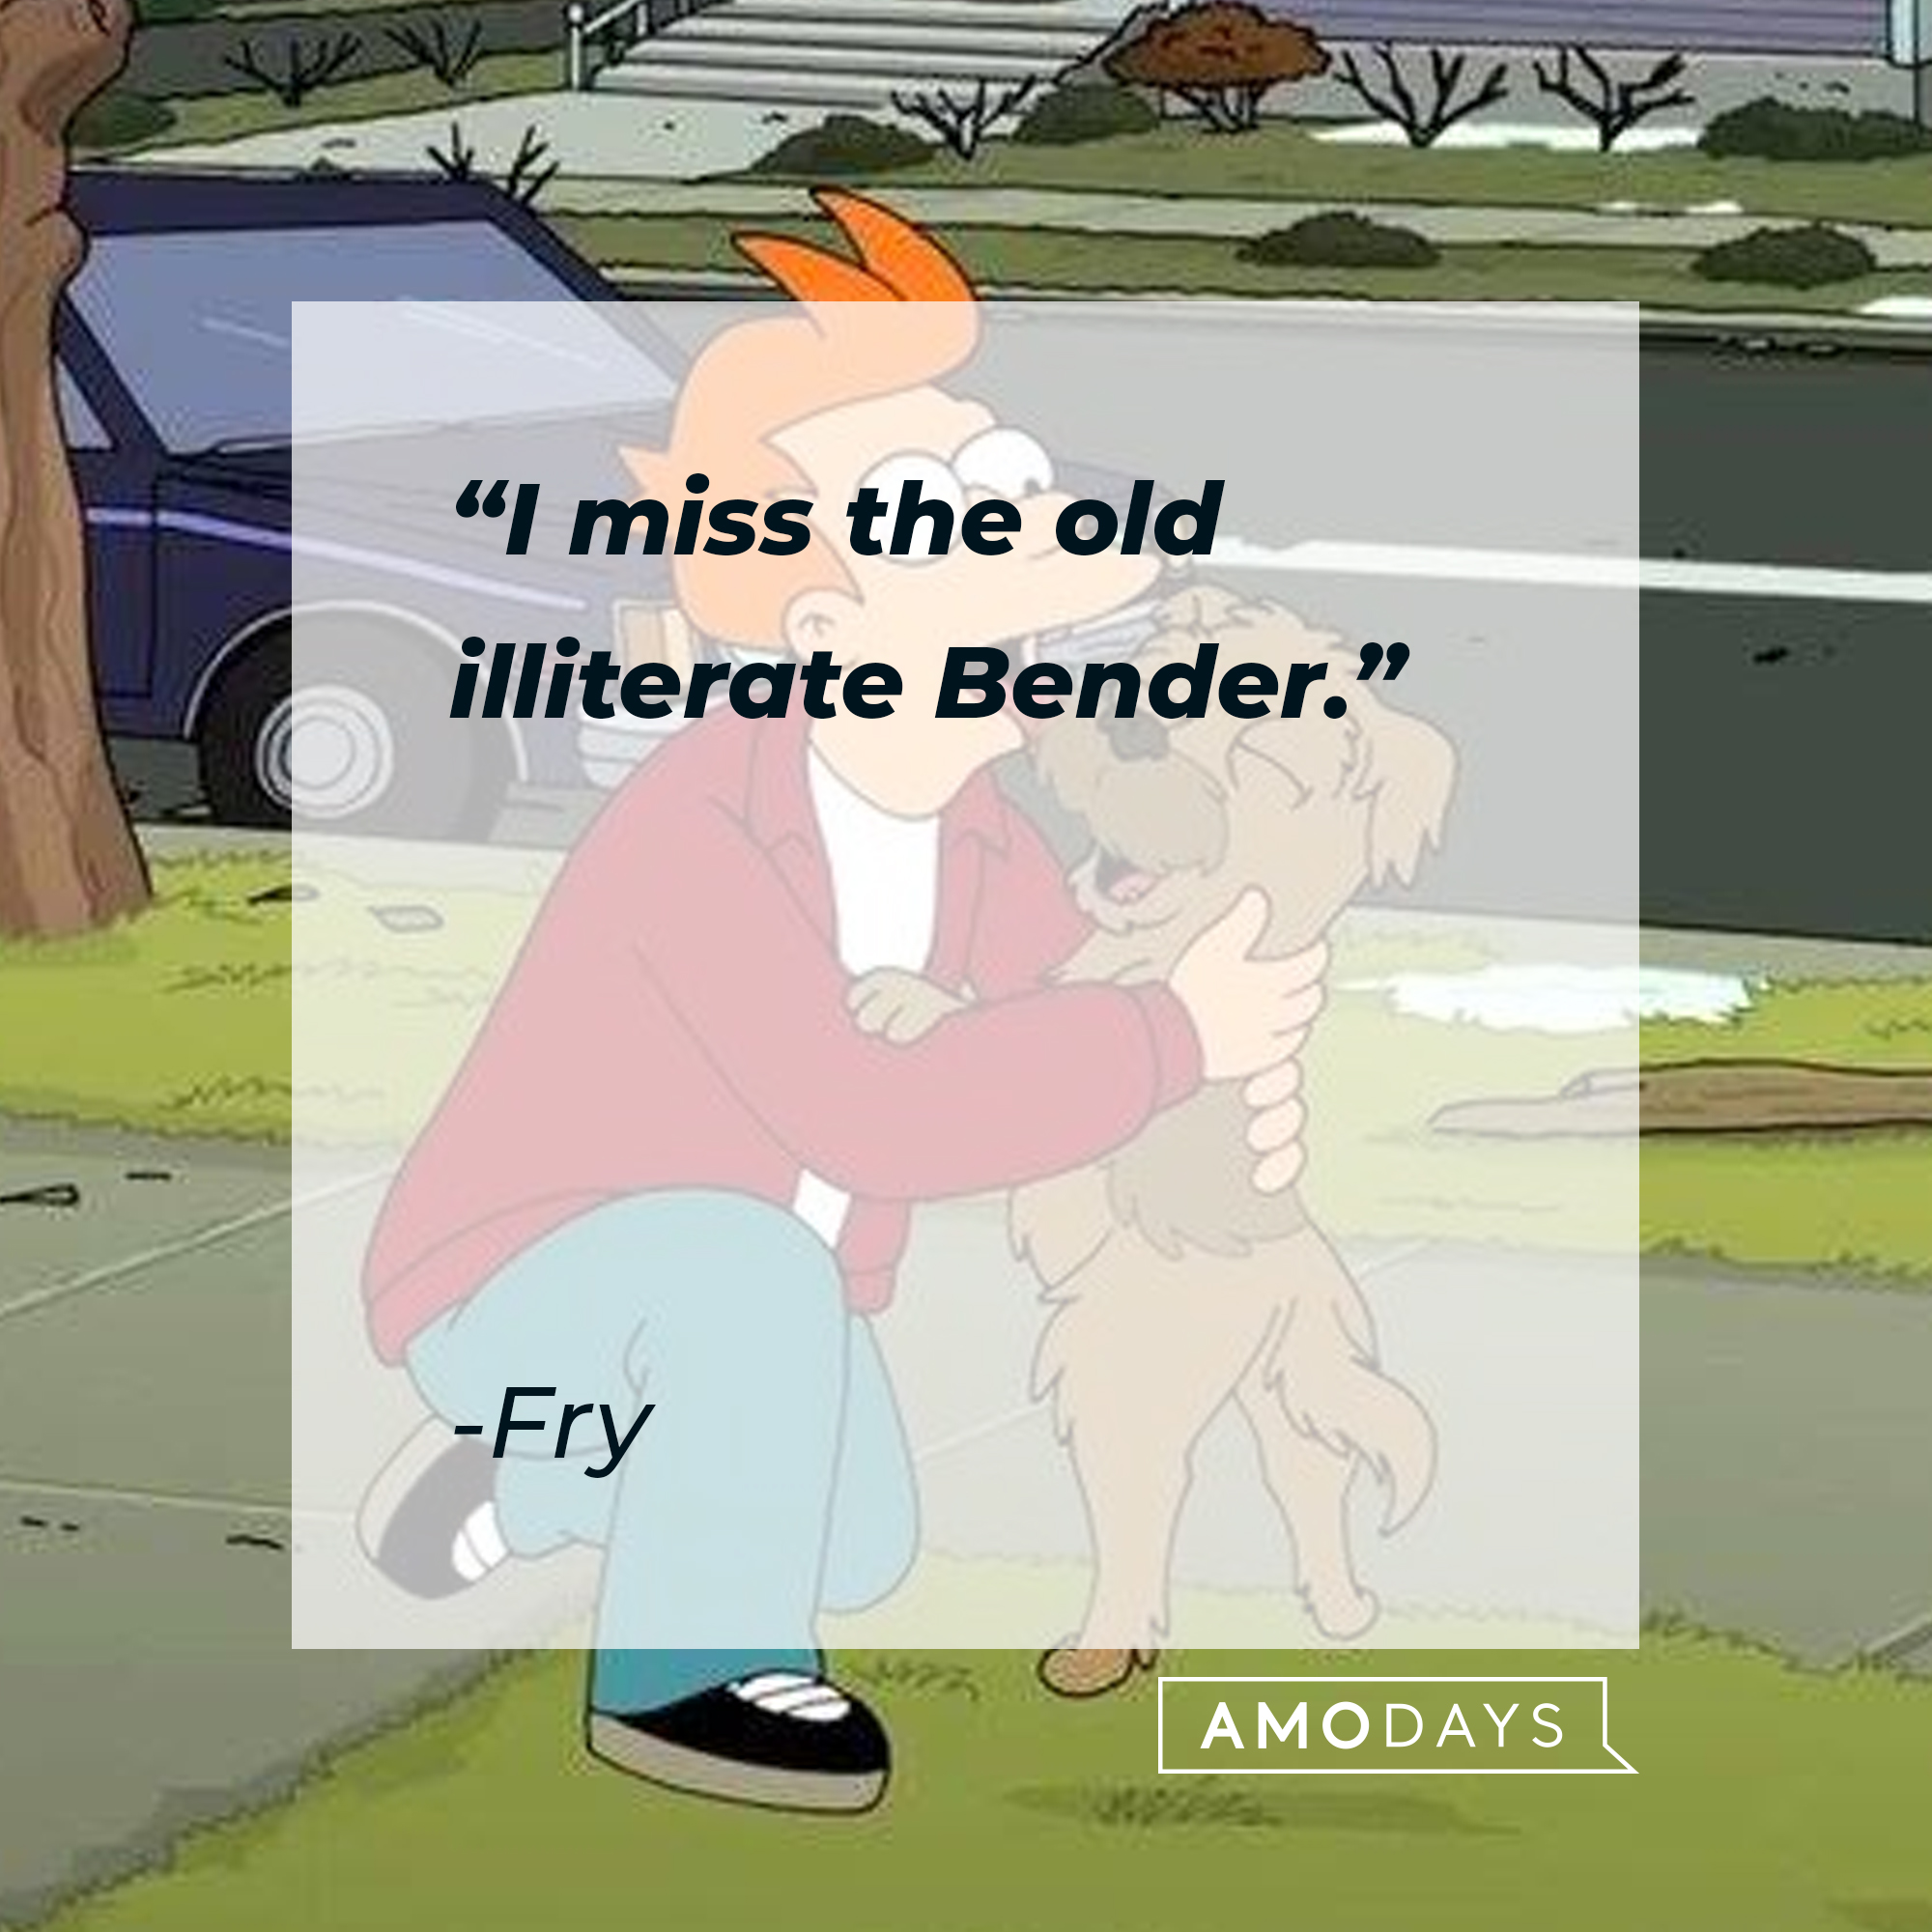 Fry Futurama's quote: "I miss the old illiterate Bender." | Source: Facebook.com/Futurama